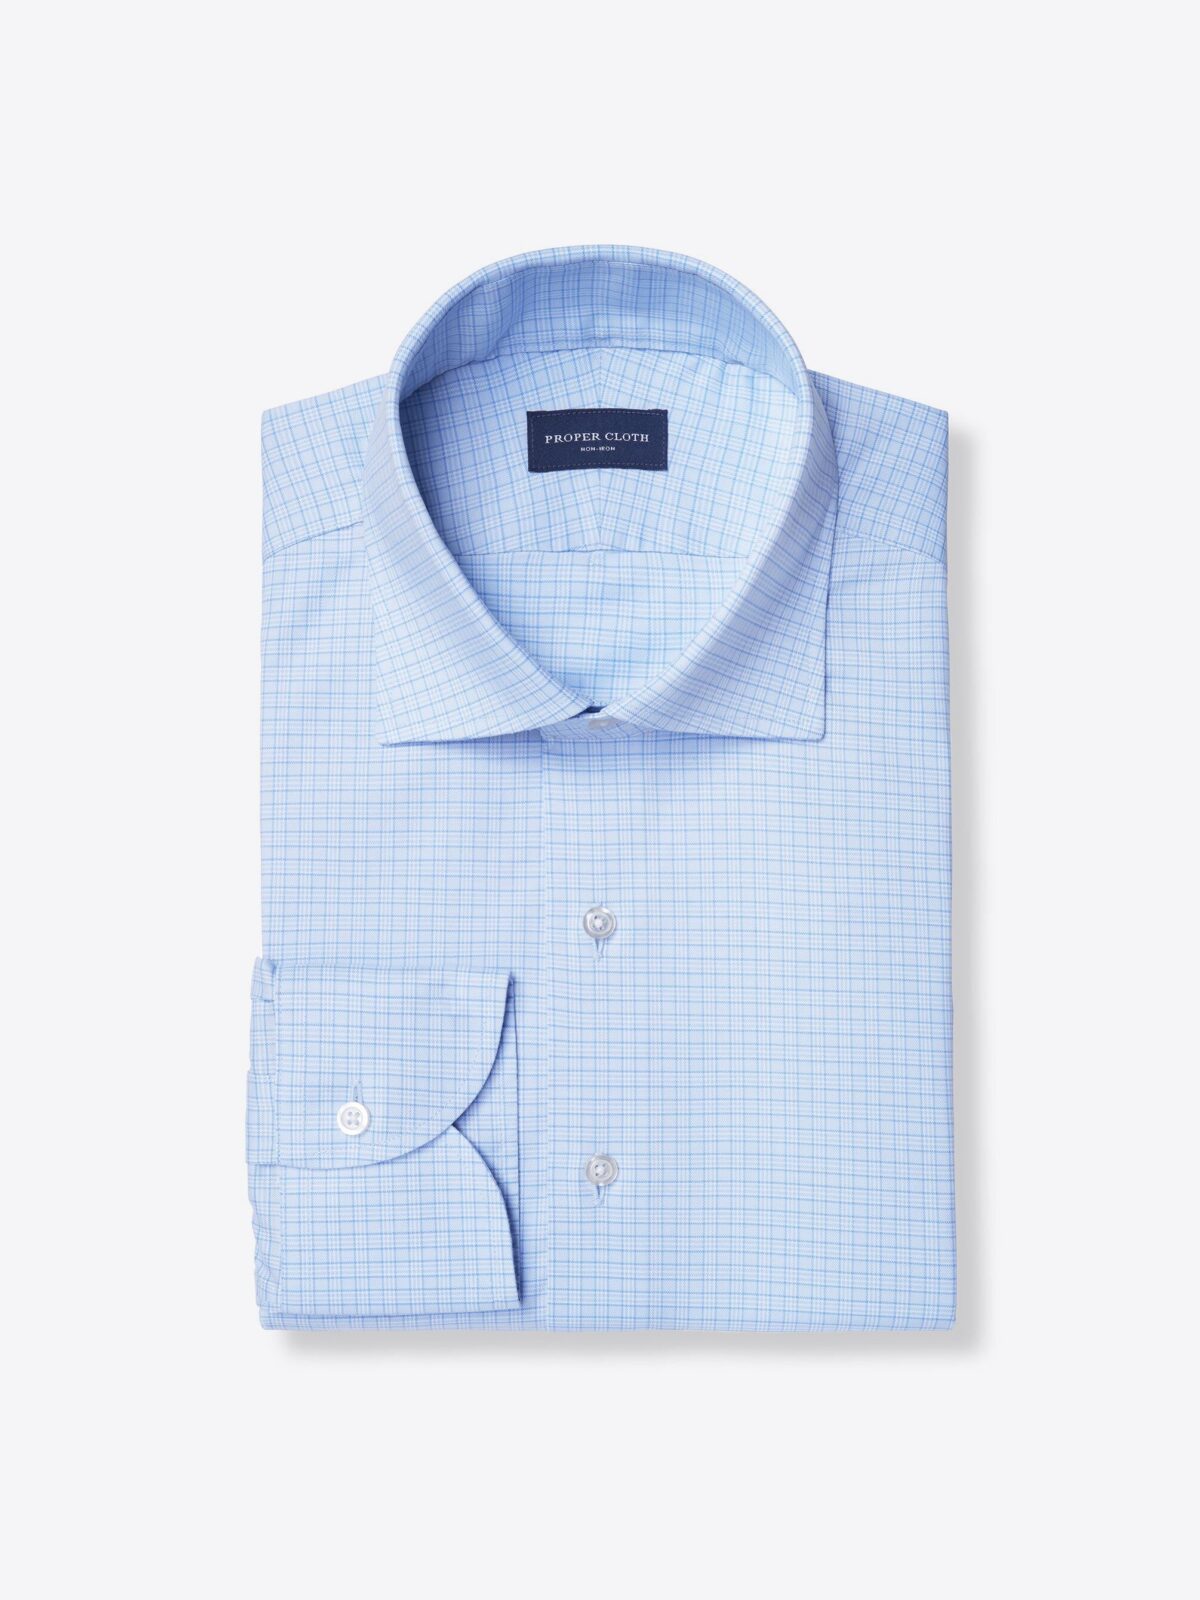 Non-Iron Stretch Light Blue Small Check Shirt by Proper Cloth